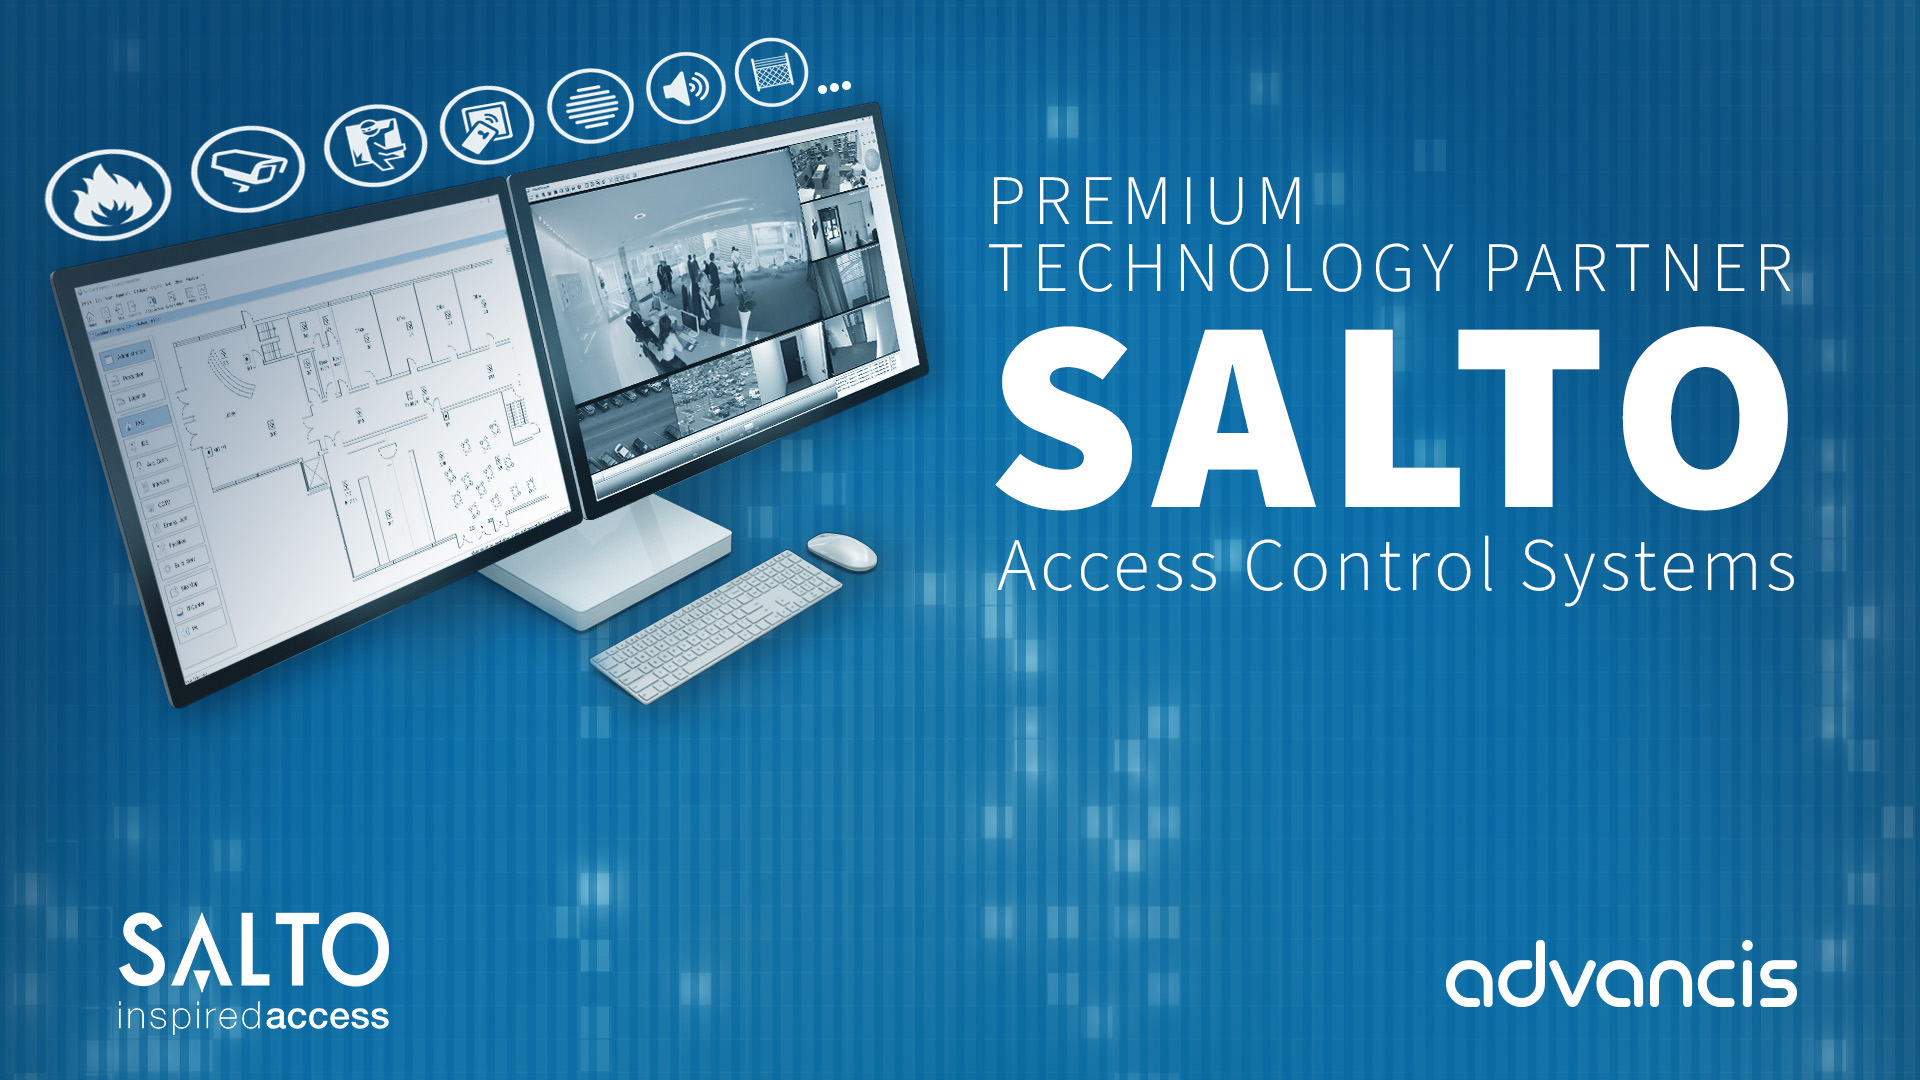  SALTO Systems – New Premium Technology Partner